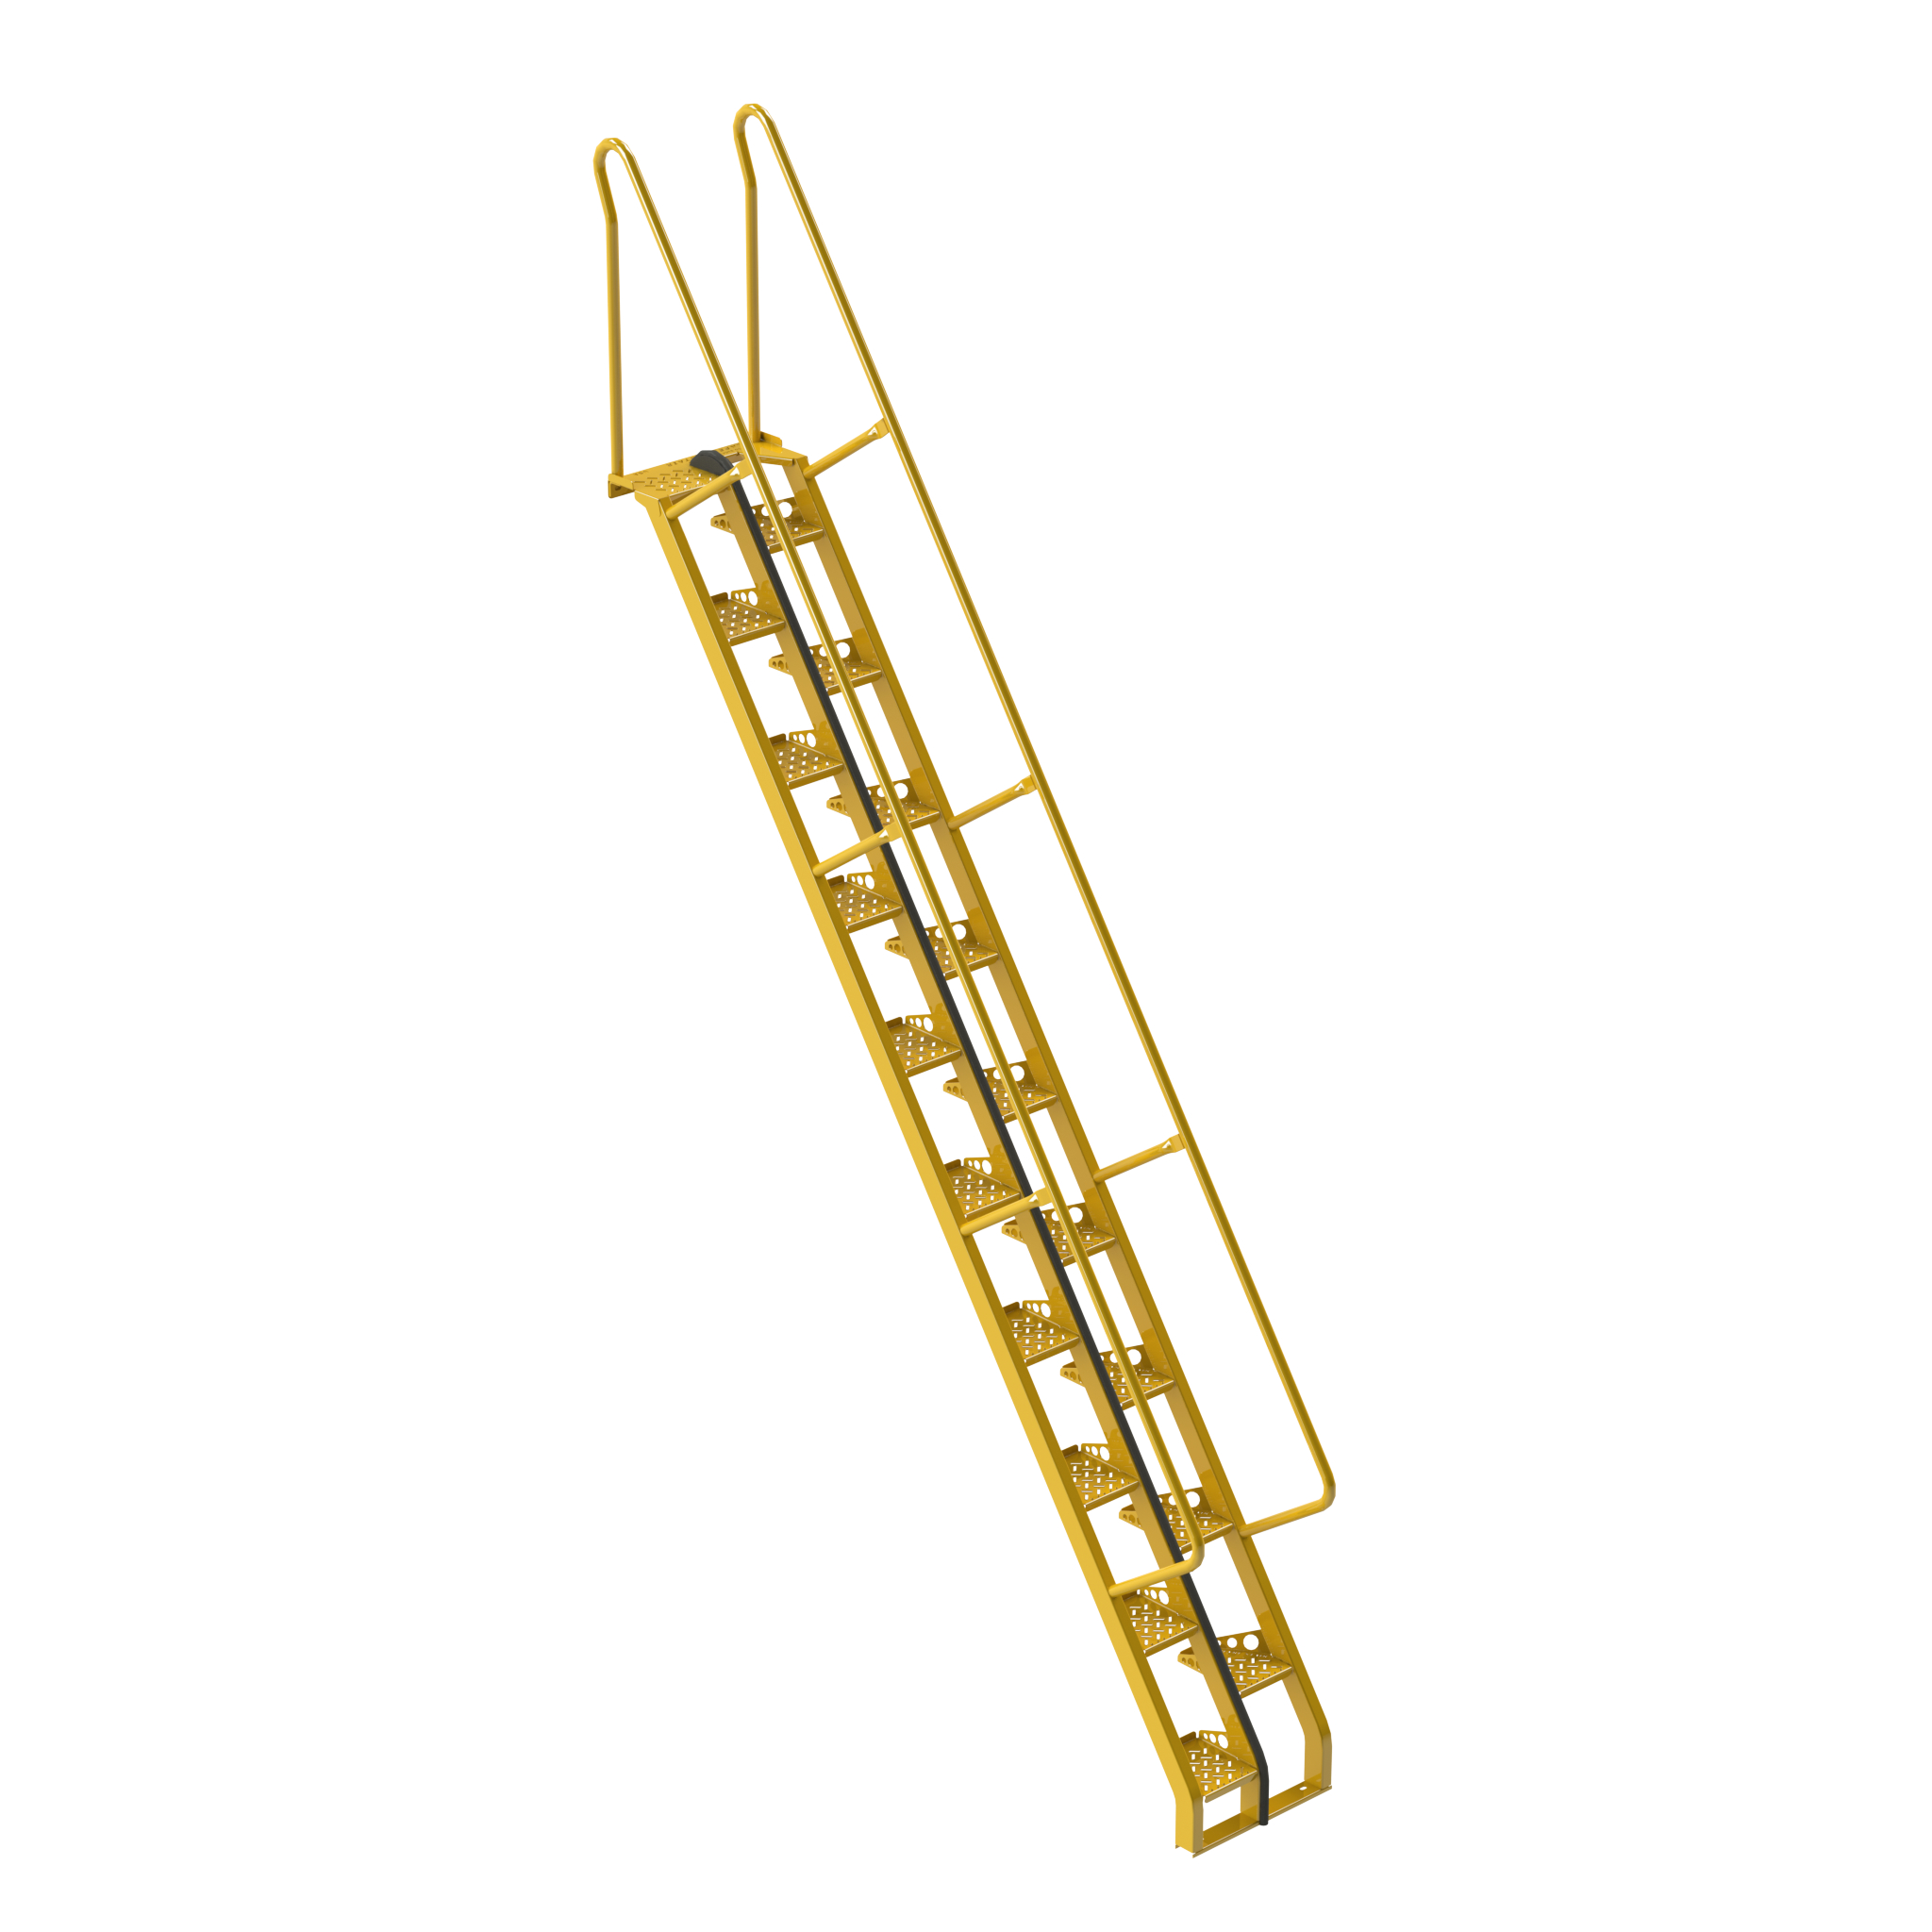 Alternating Tread Stair, Steel, Safety Yellow, 56 Degree, Standard Handrail